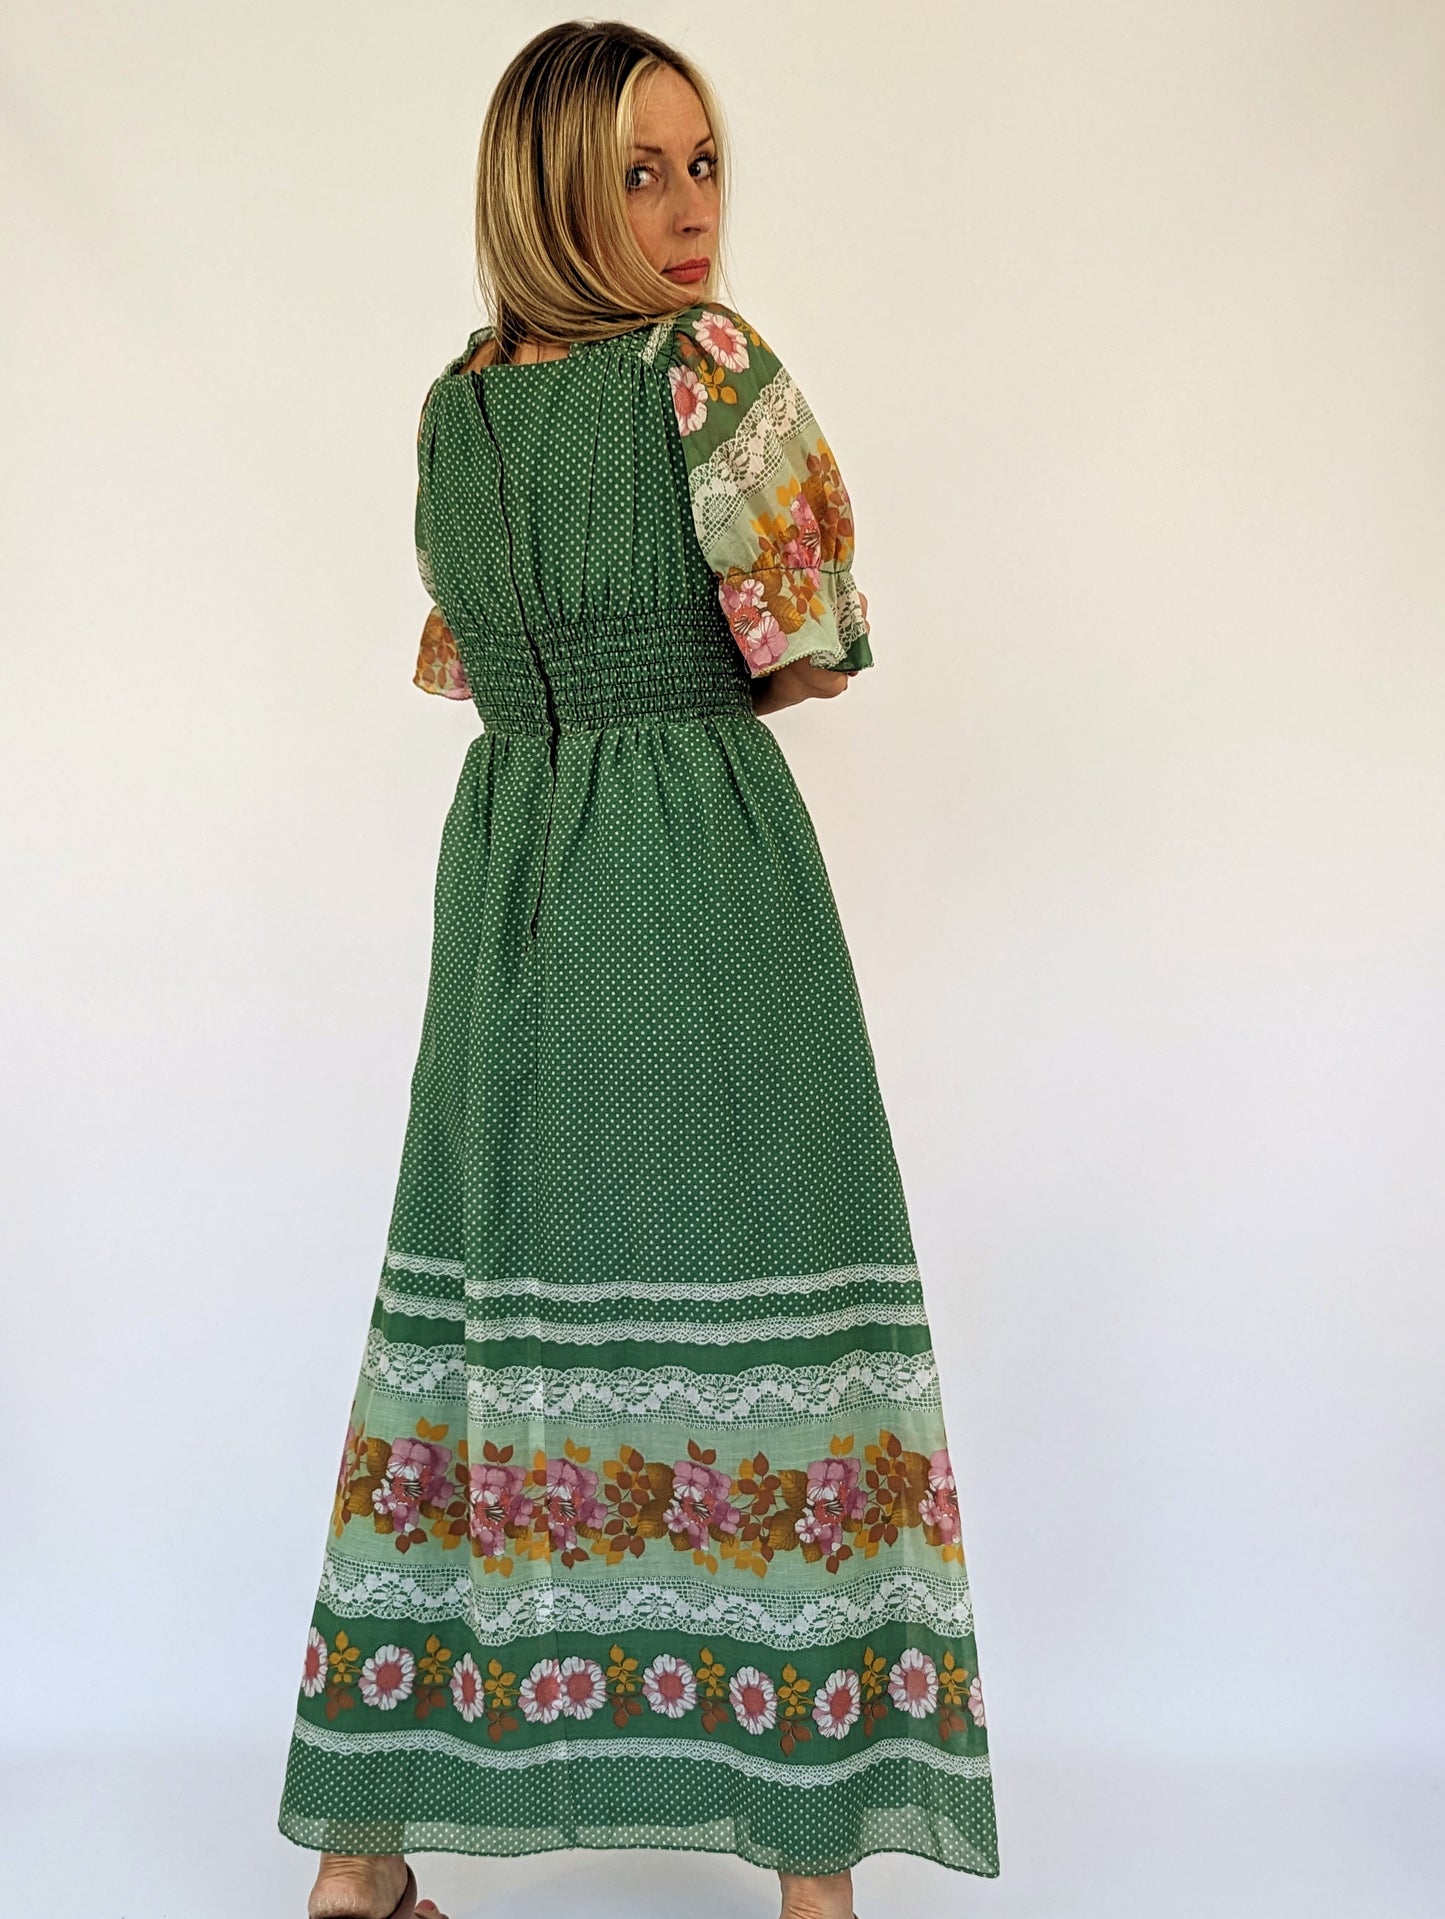 Green long vintage dress